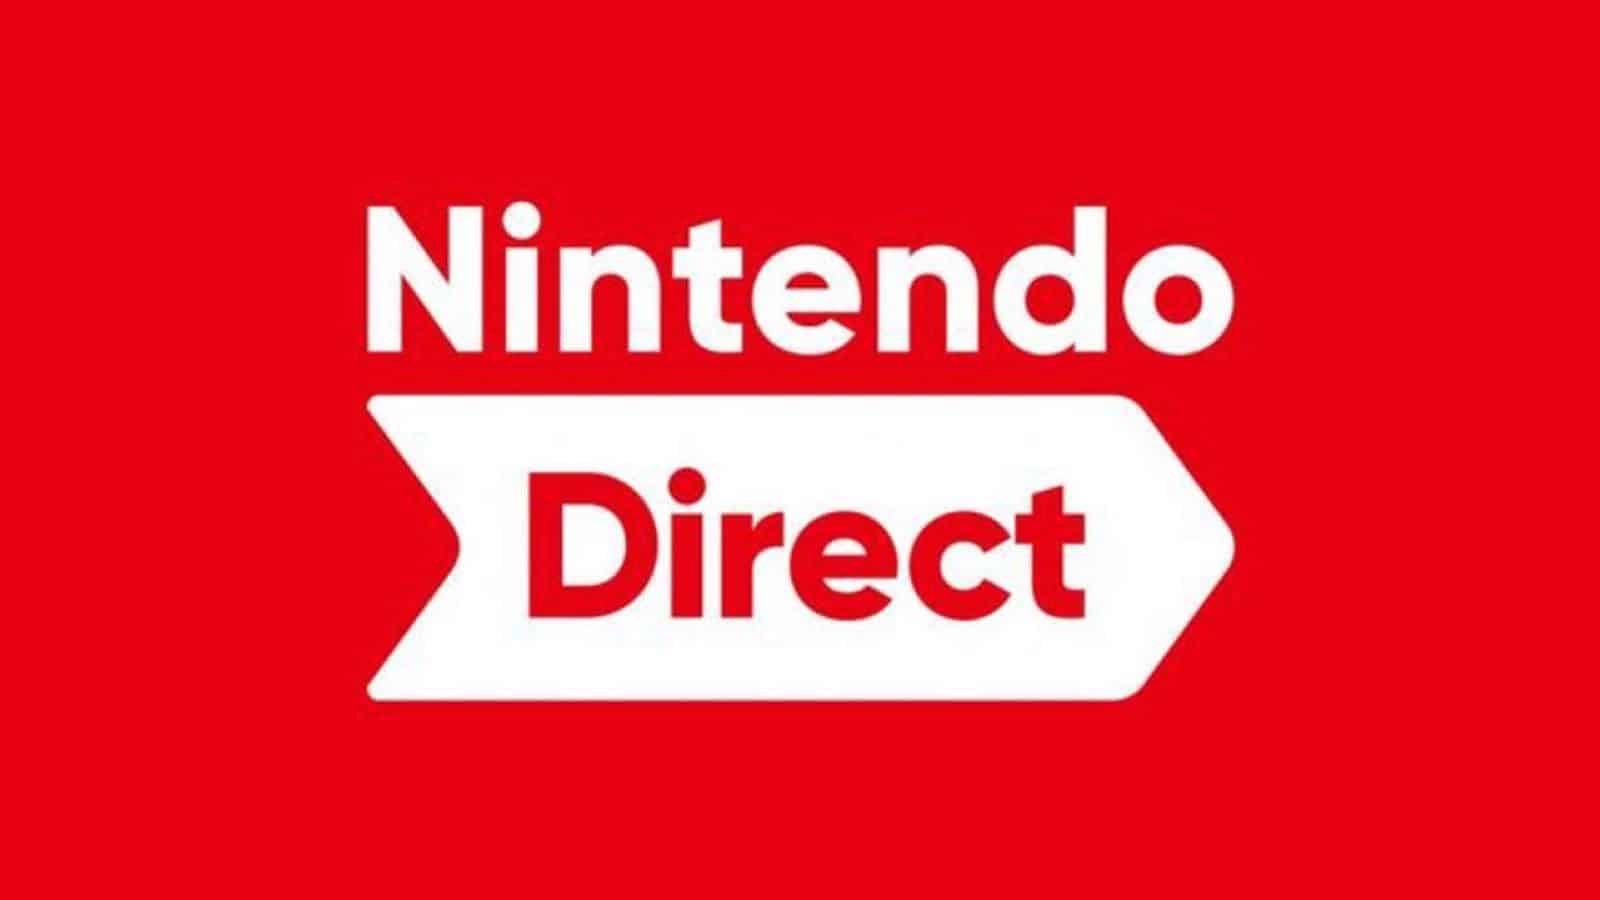 Nintendo Direct confirmat pentru mâine, 21 iunie